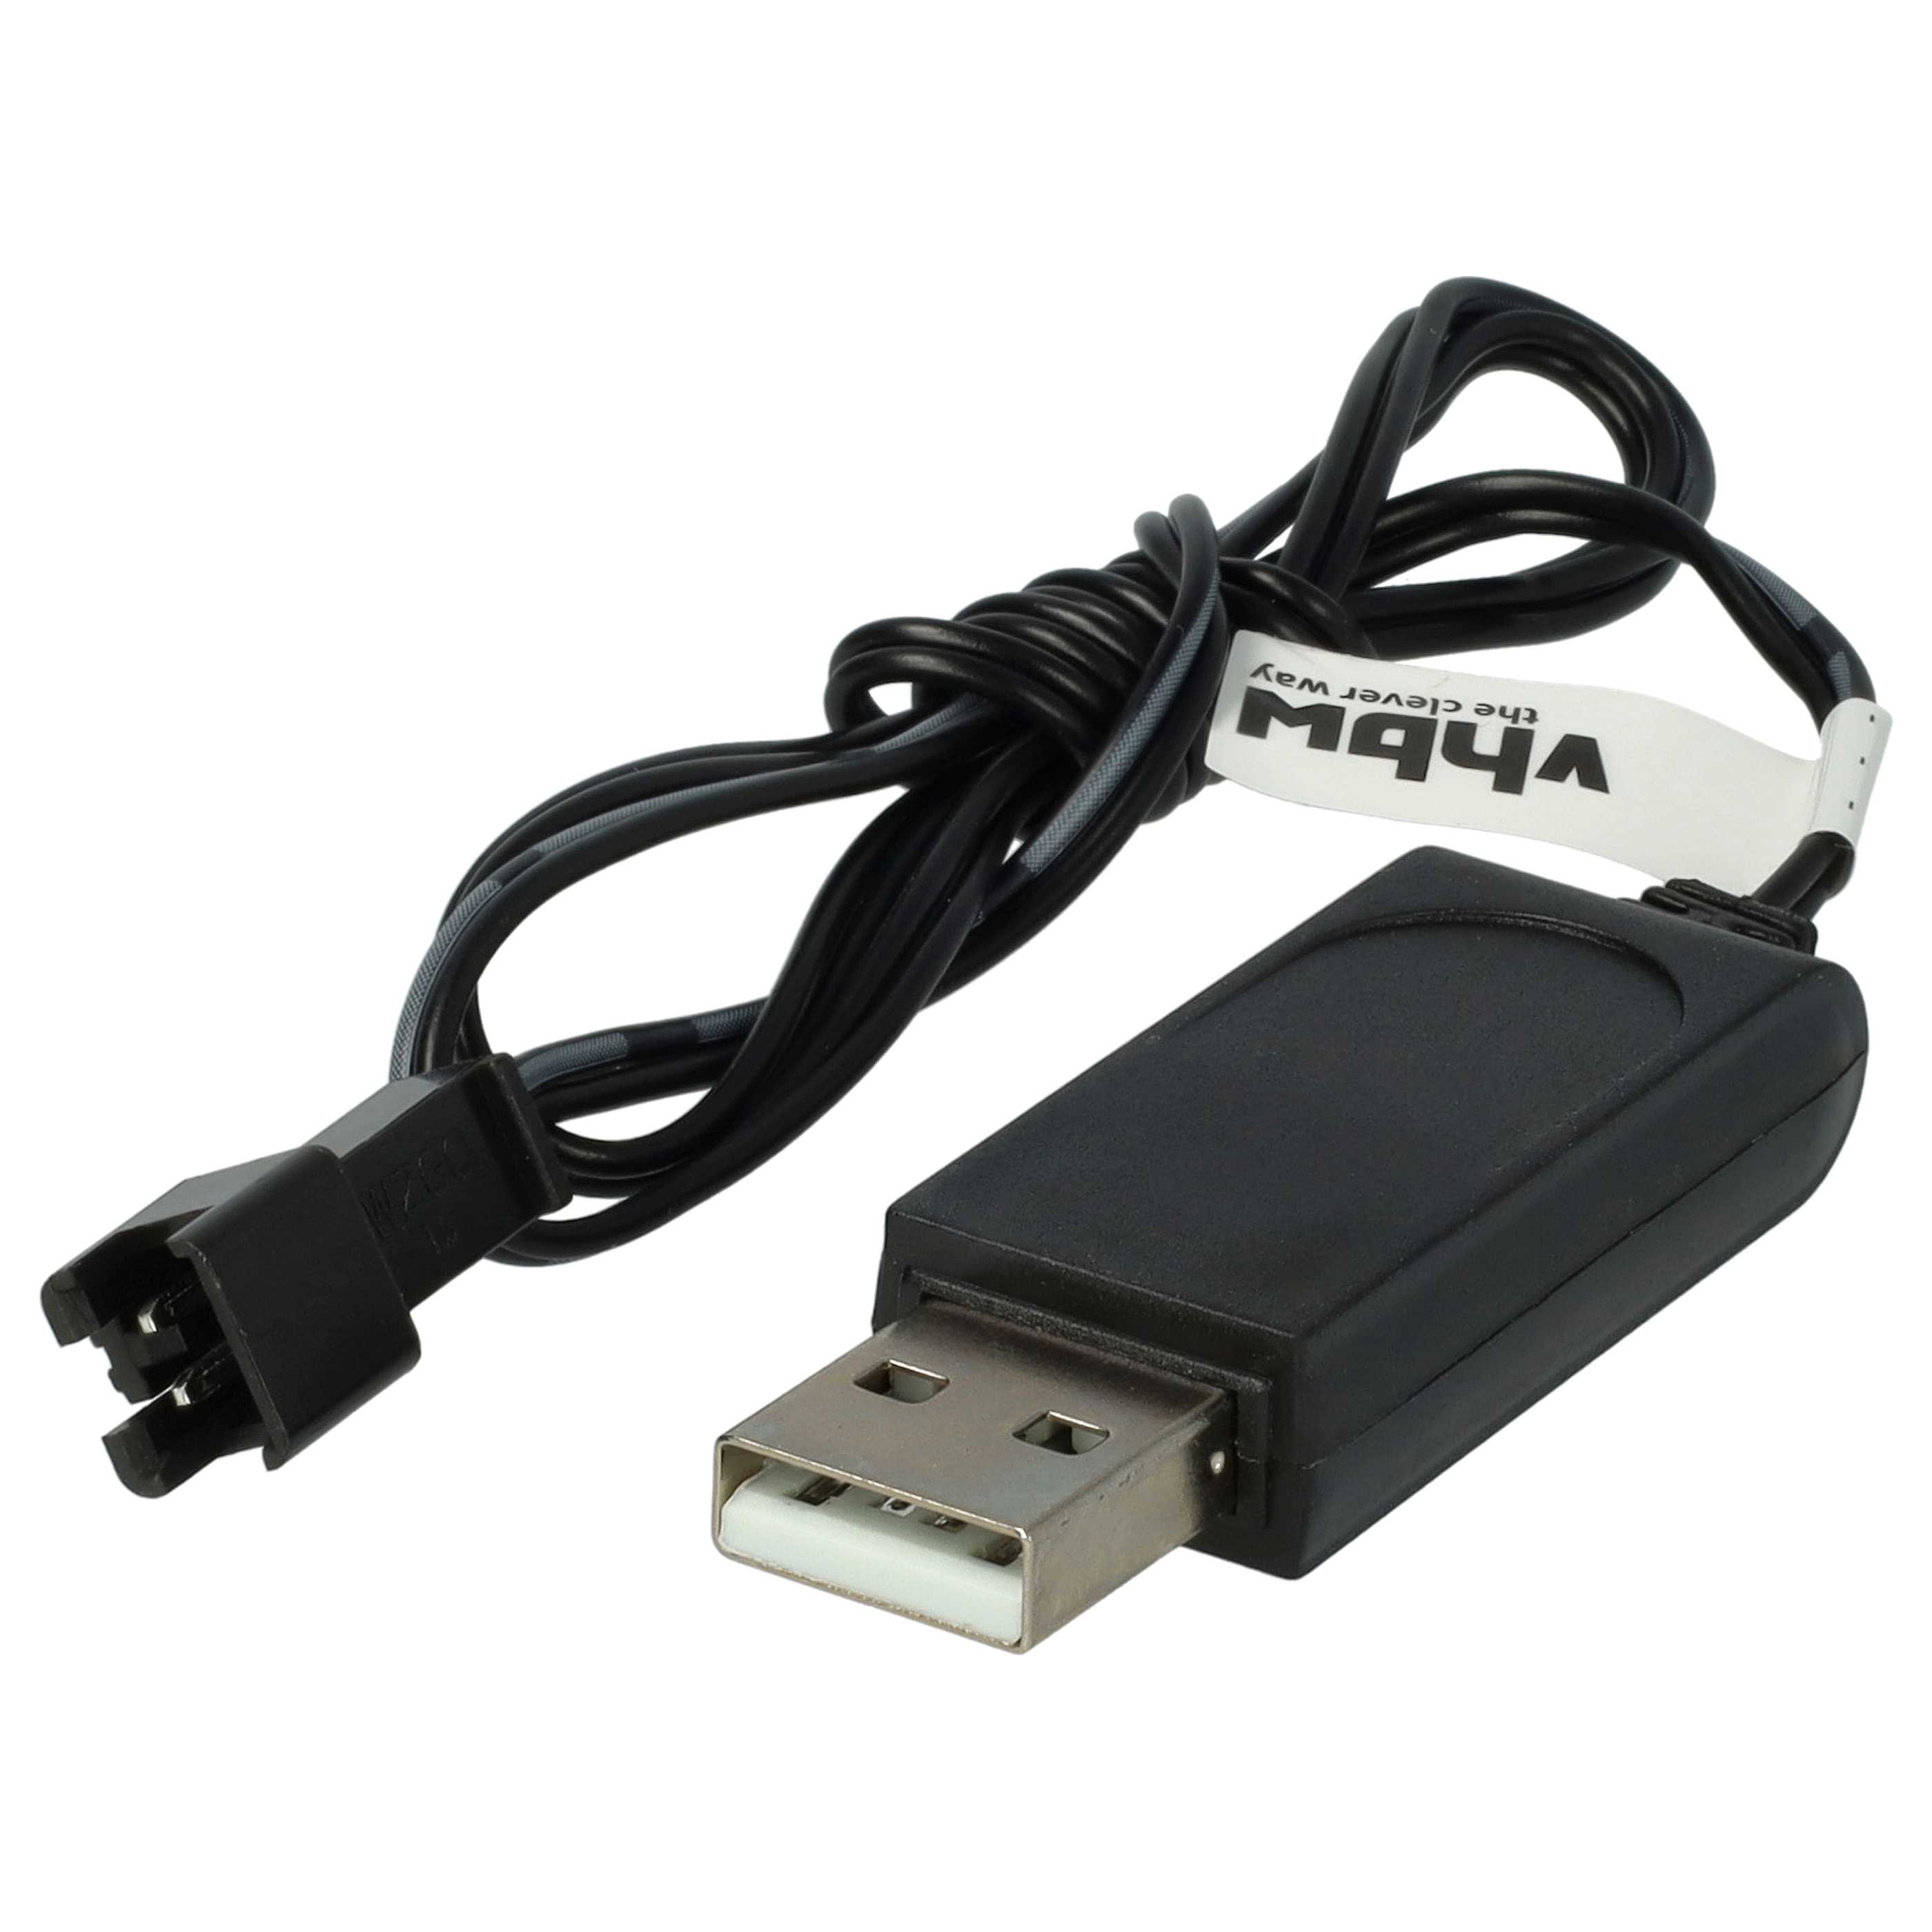 USB-Ladekabel passend für RC-Akkus mit SM-2P-Anschluss, RC-Modellbau Akkupacks - 60cm 4,8V